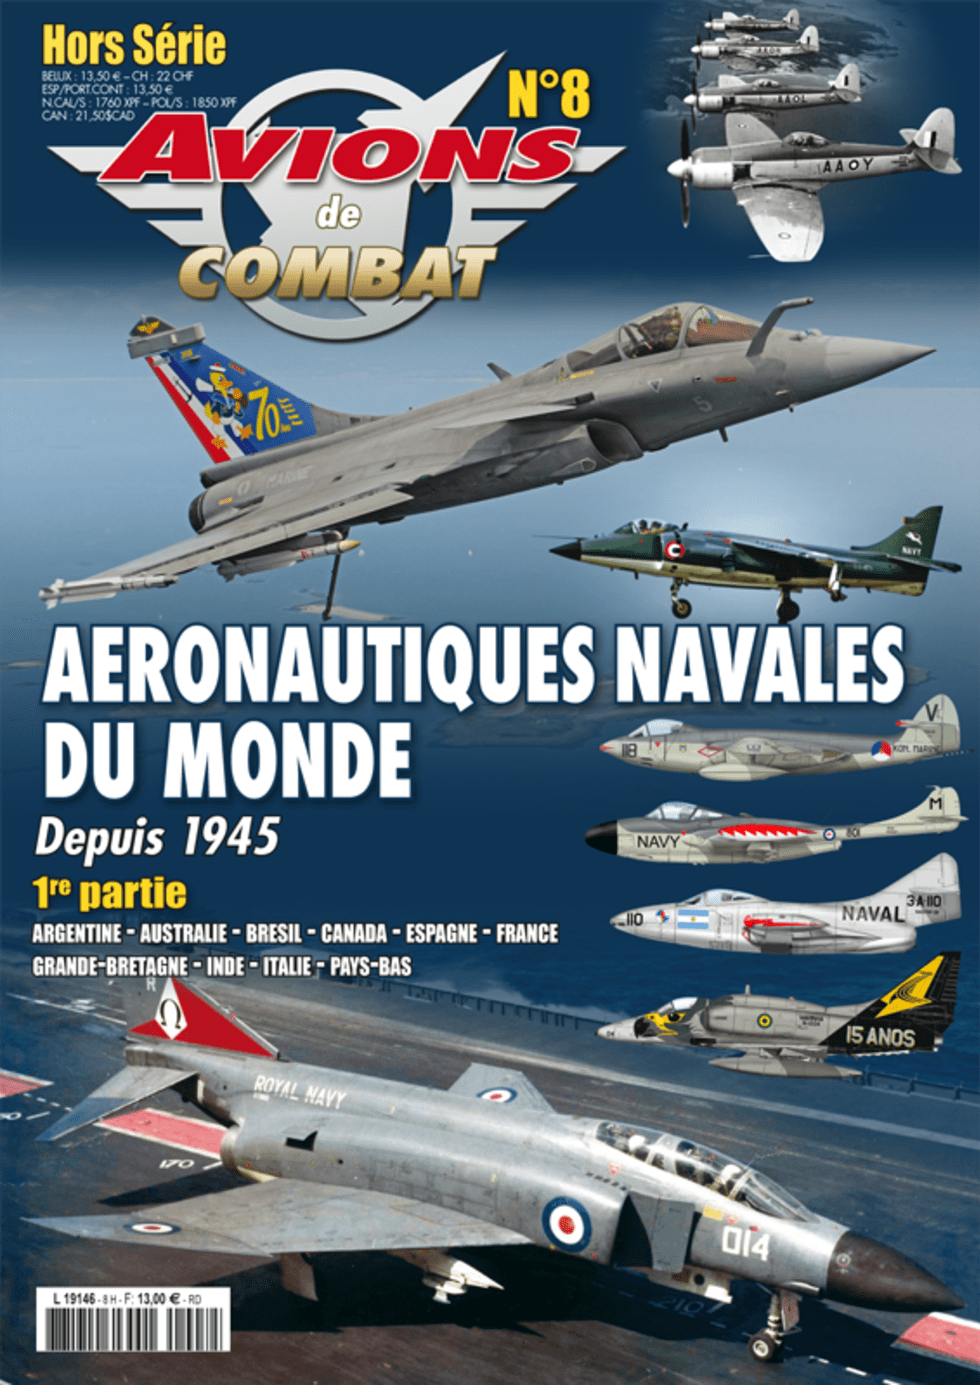 Avions de combat Special issue n°8 magazine cover